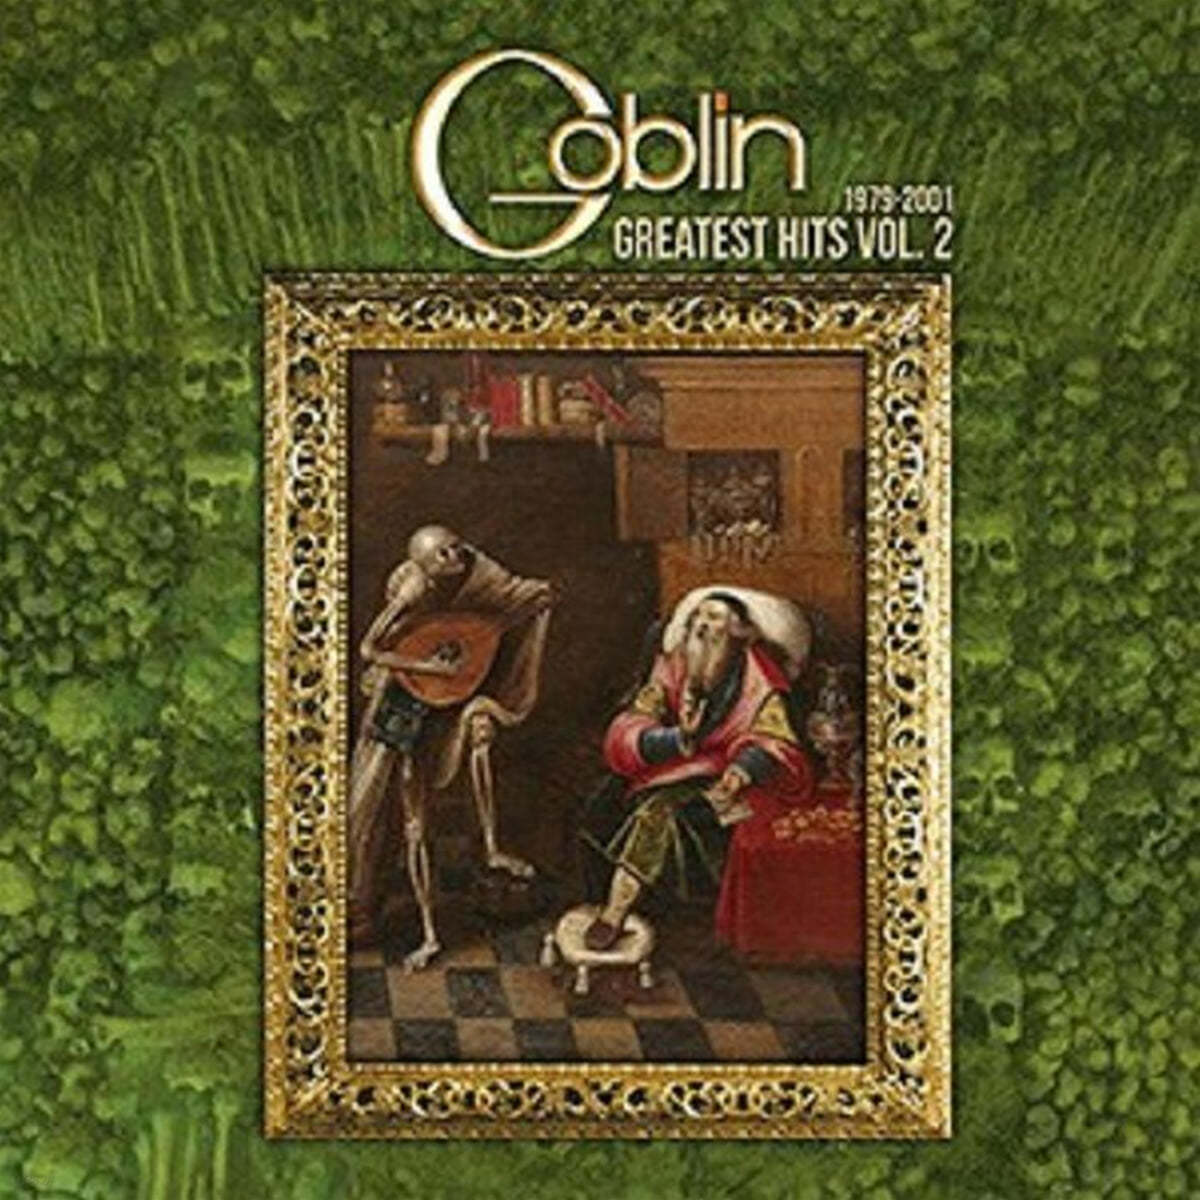 Goblin (고블린) - Greatest Hits Vol. 2 (1979-2001) [LP] 